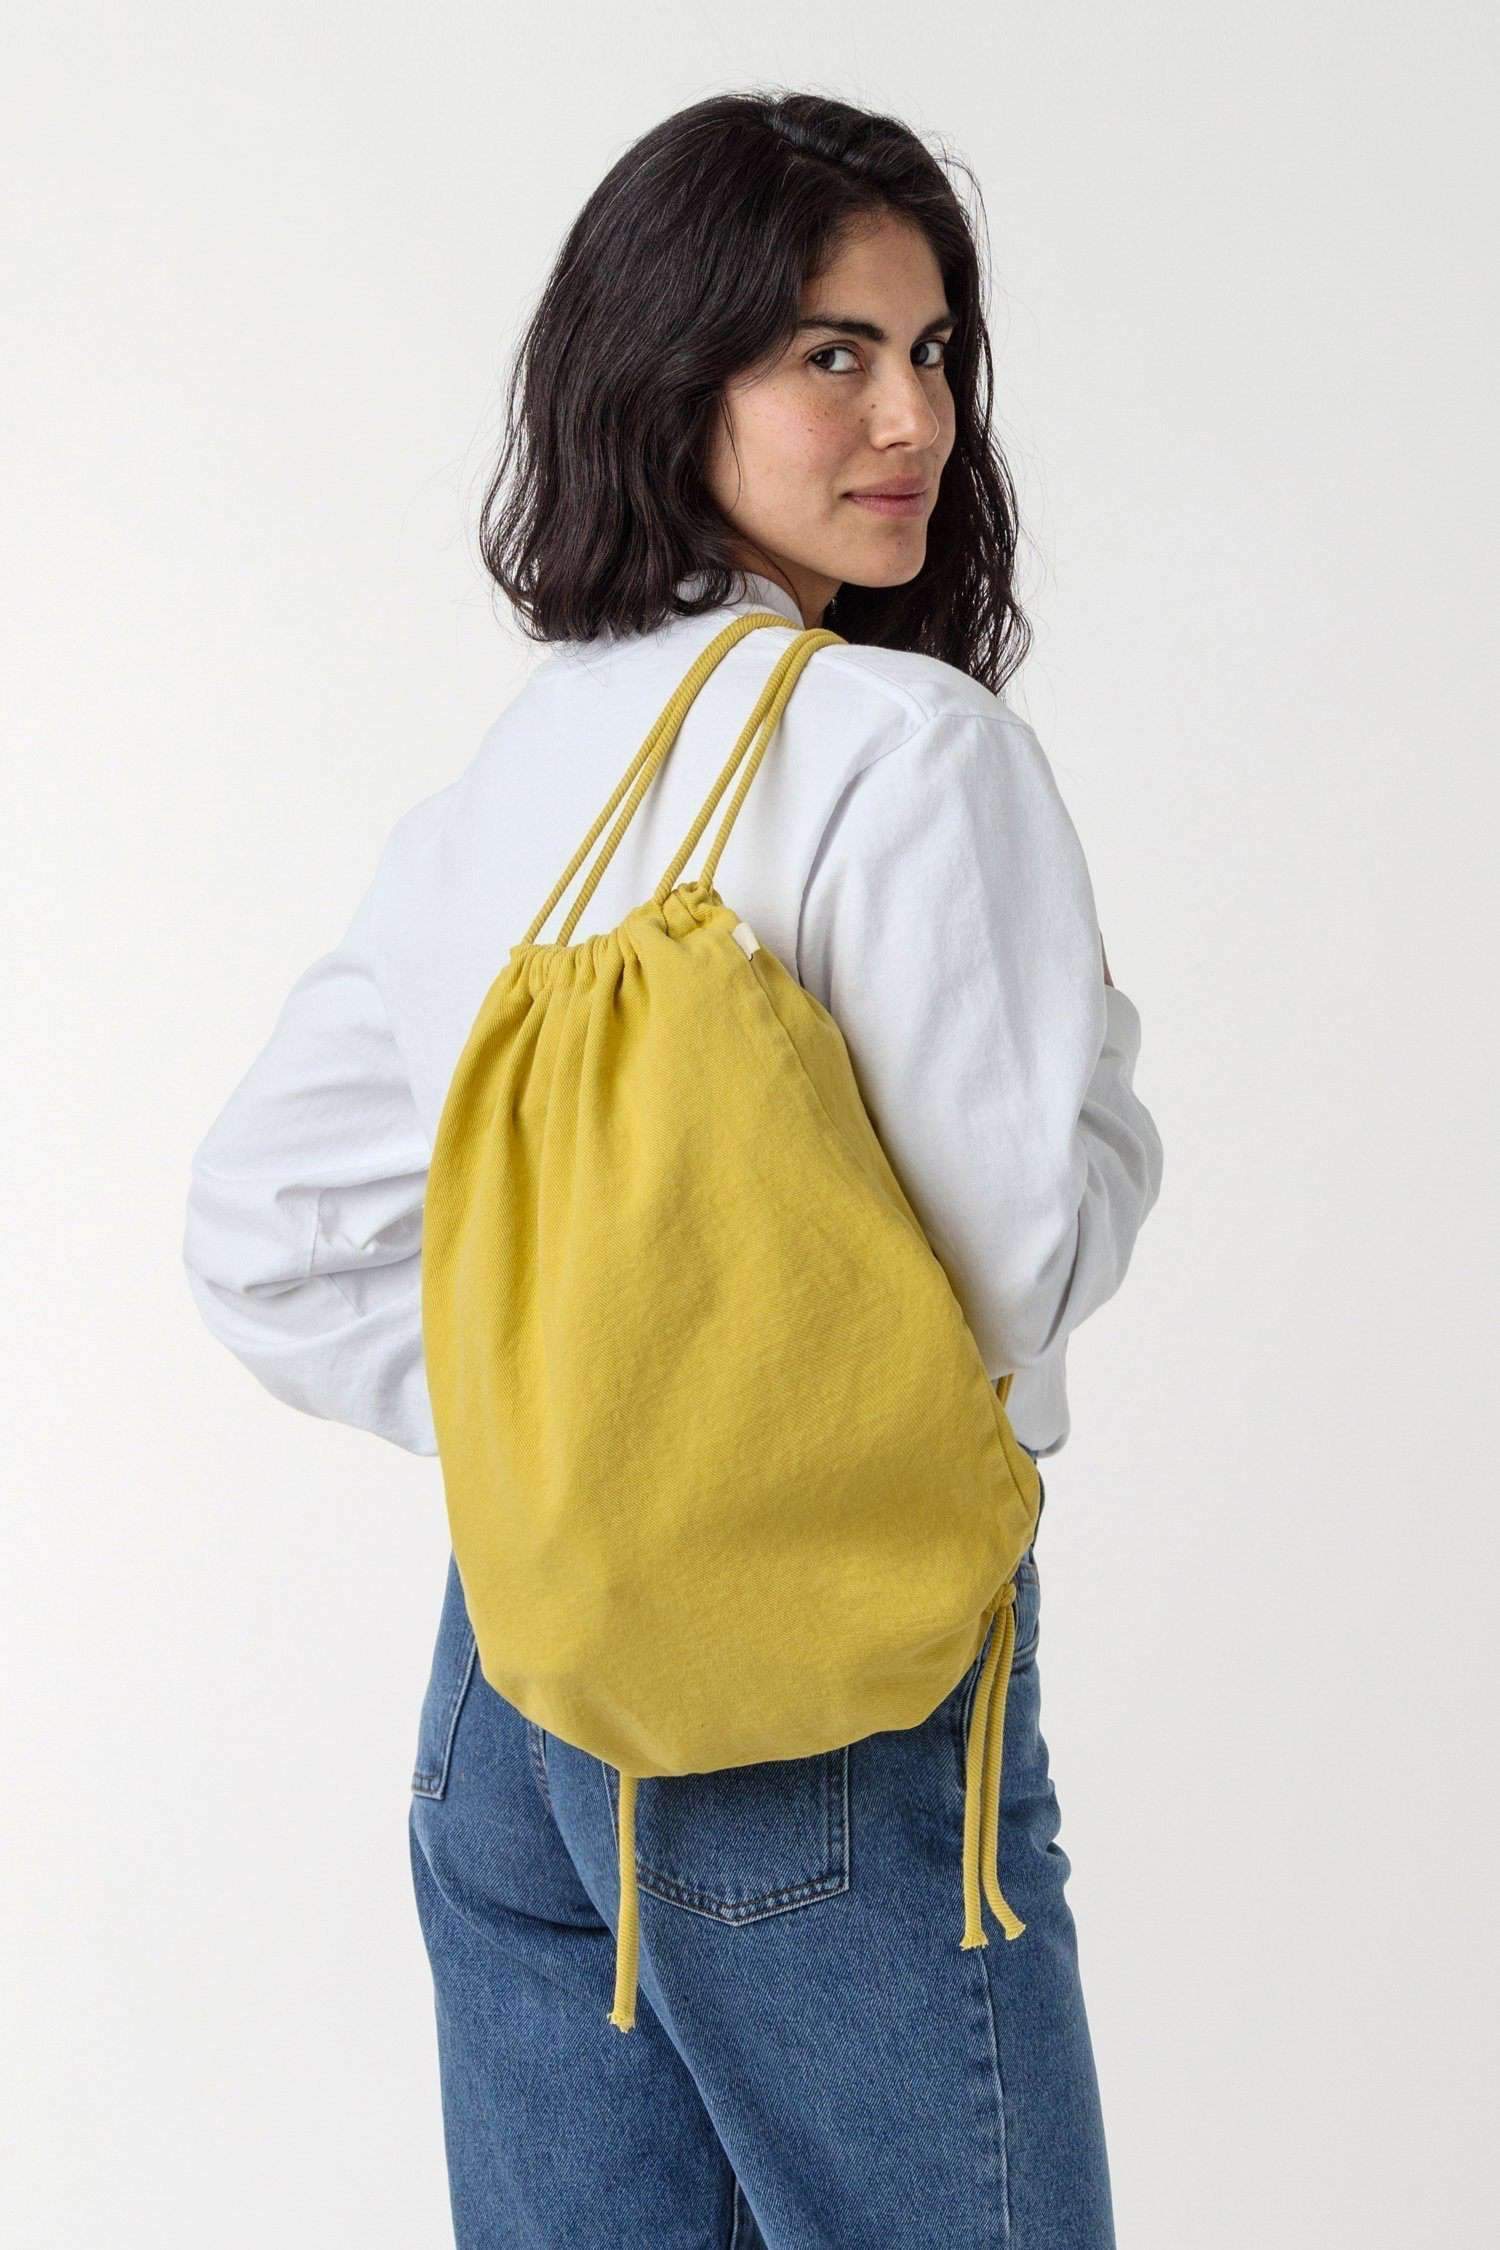 BD09 - Bull Denim Drawstring Backpack Bags Los Angeles Apparel Spectra Yellow 